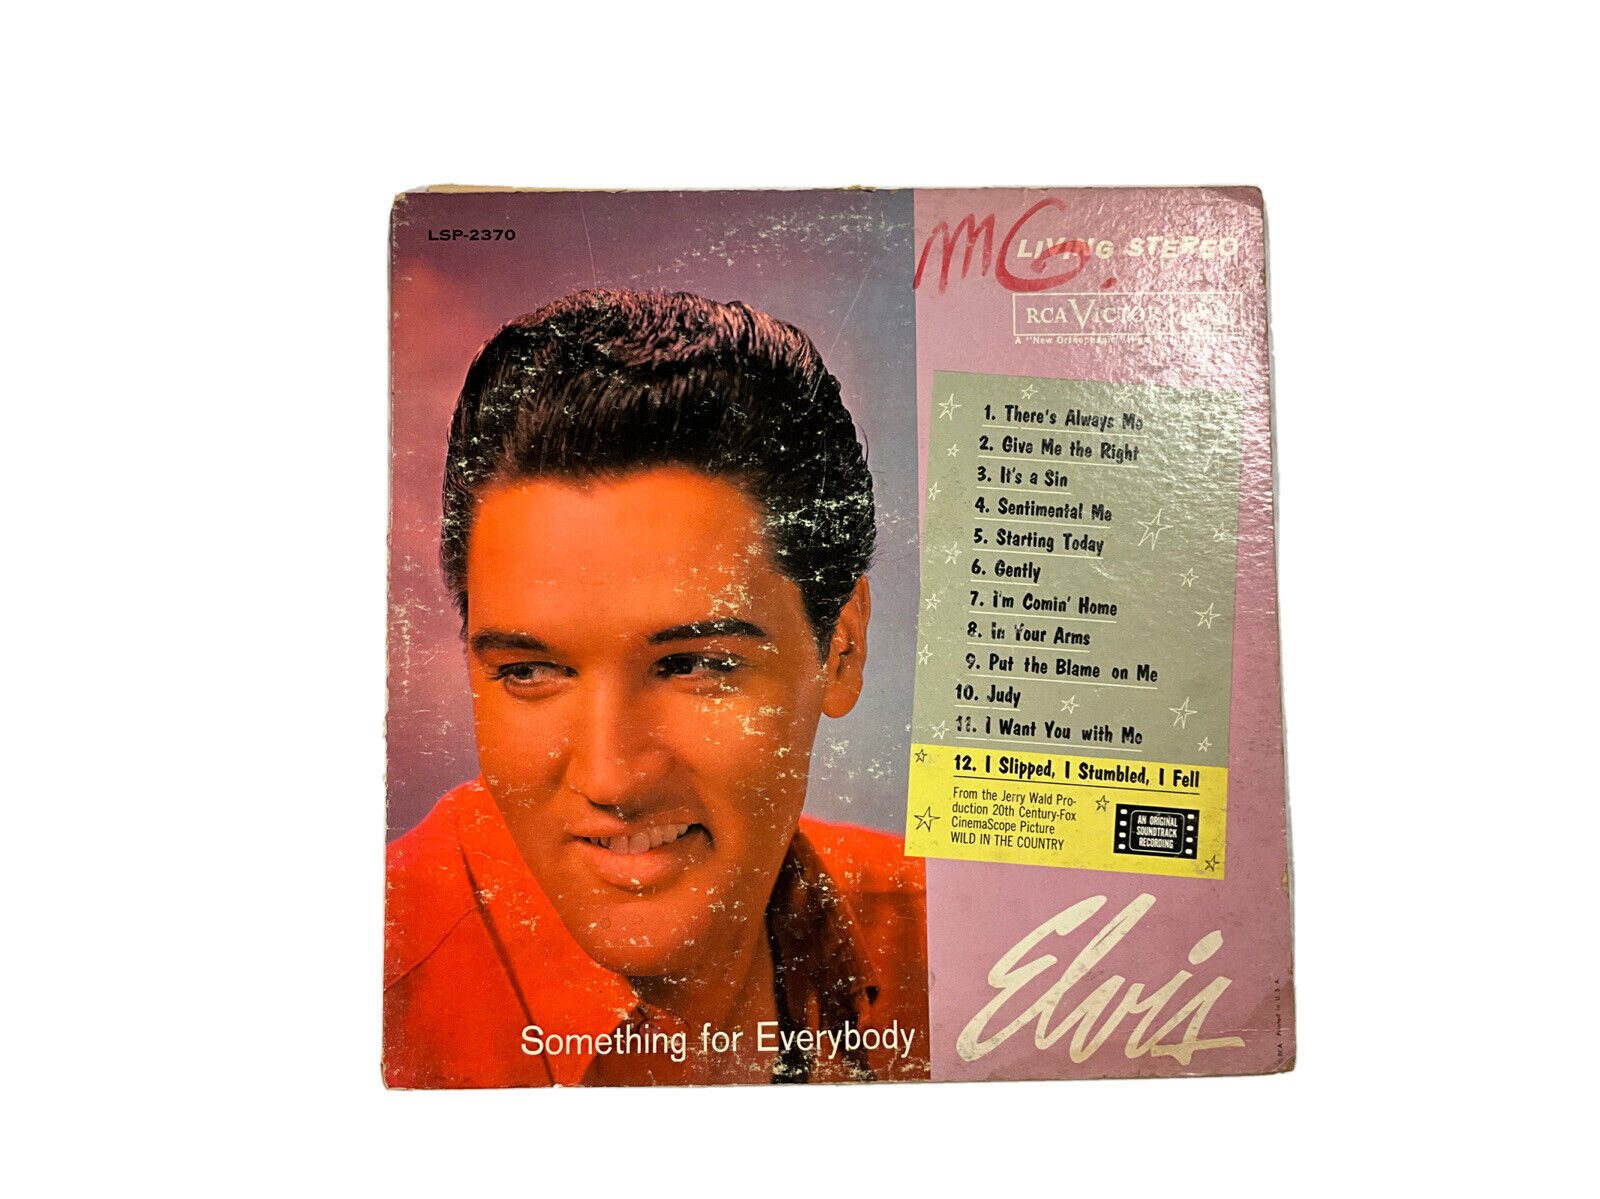 Elvis Presley - Something For Everybody LP  RCA Victor LPM-2370 - Original Mono